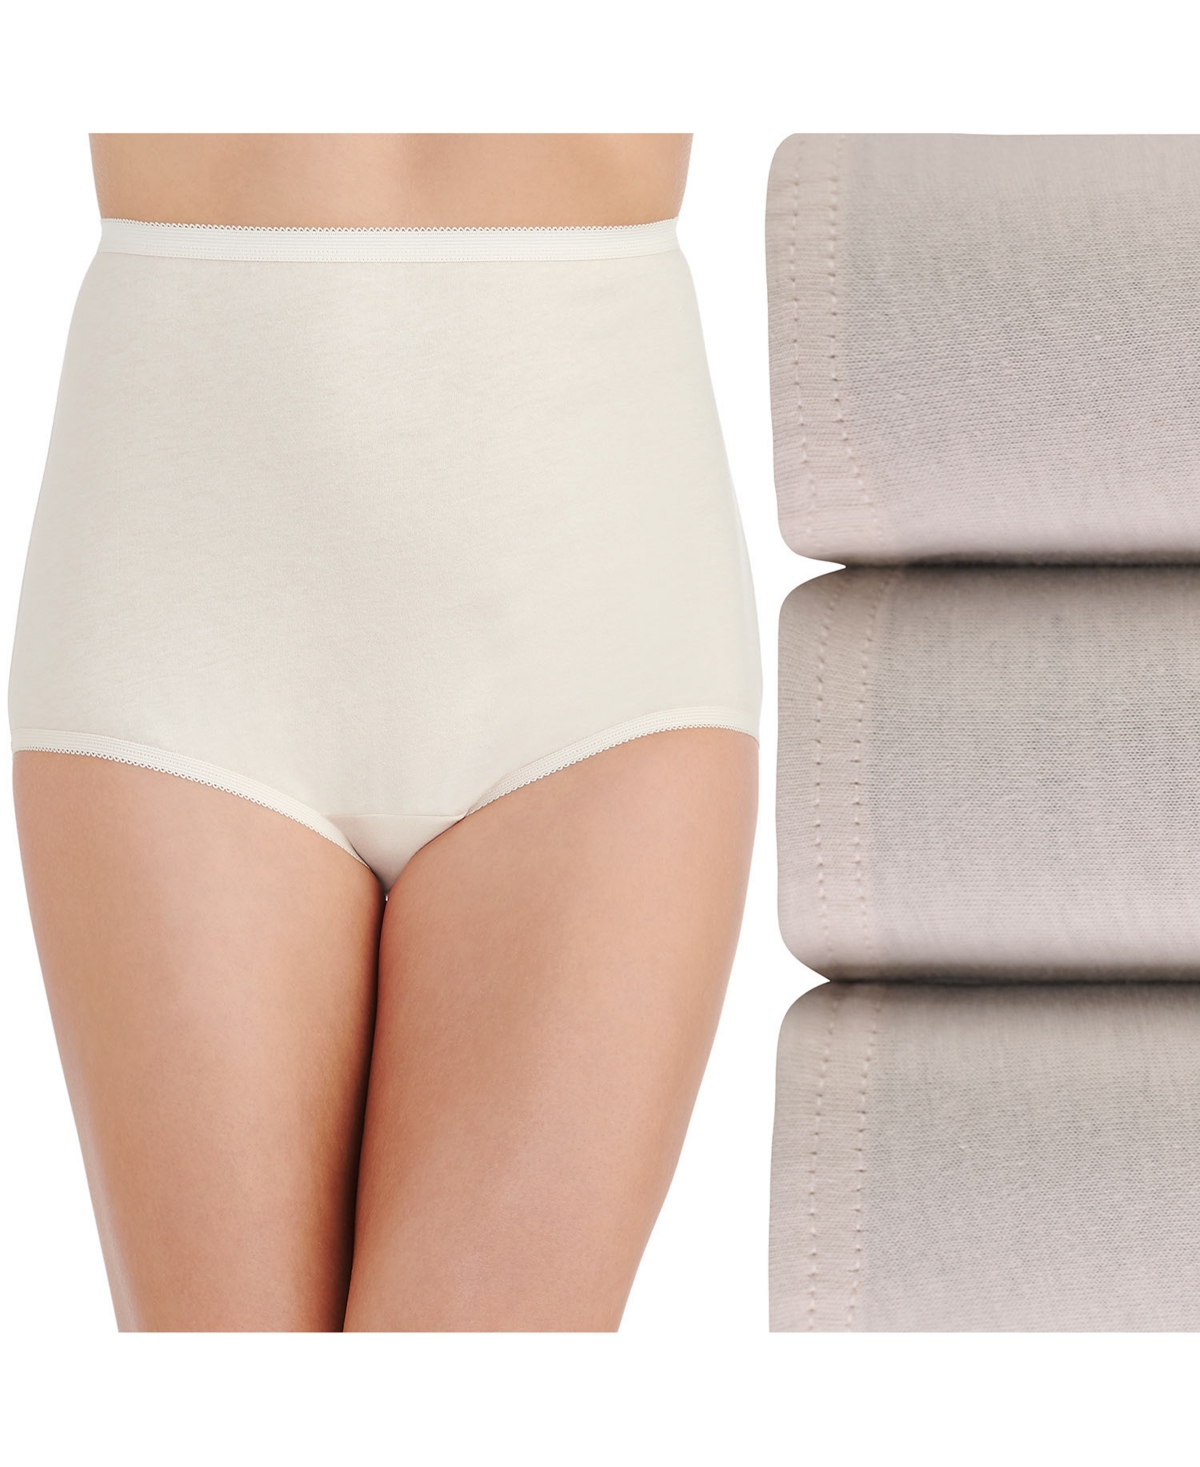 Women's 3-Pk. Perfectly Yours Cotton Brief Underwear 15320 - Lavender/Blush/White